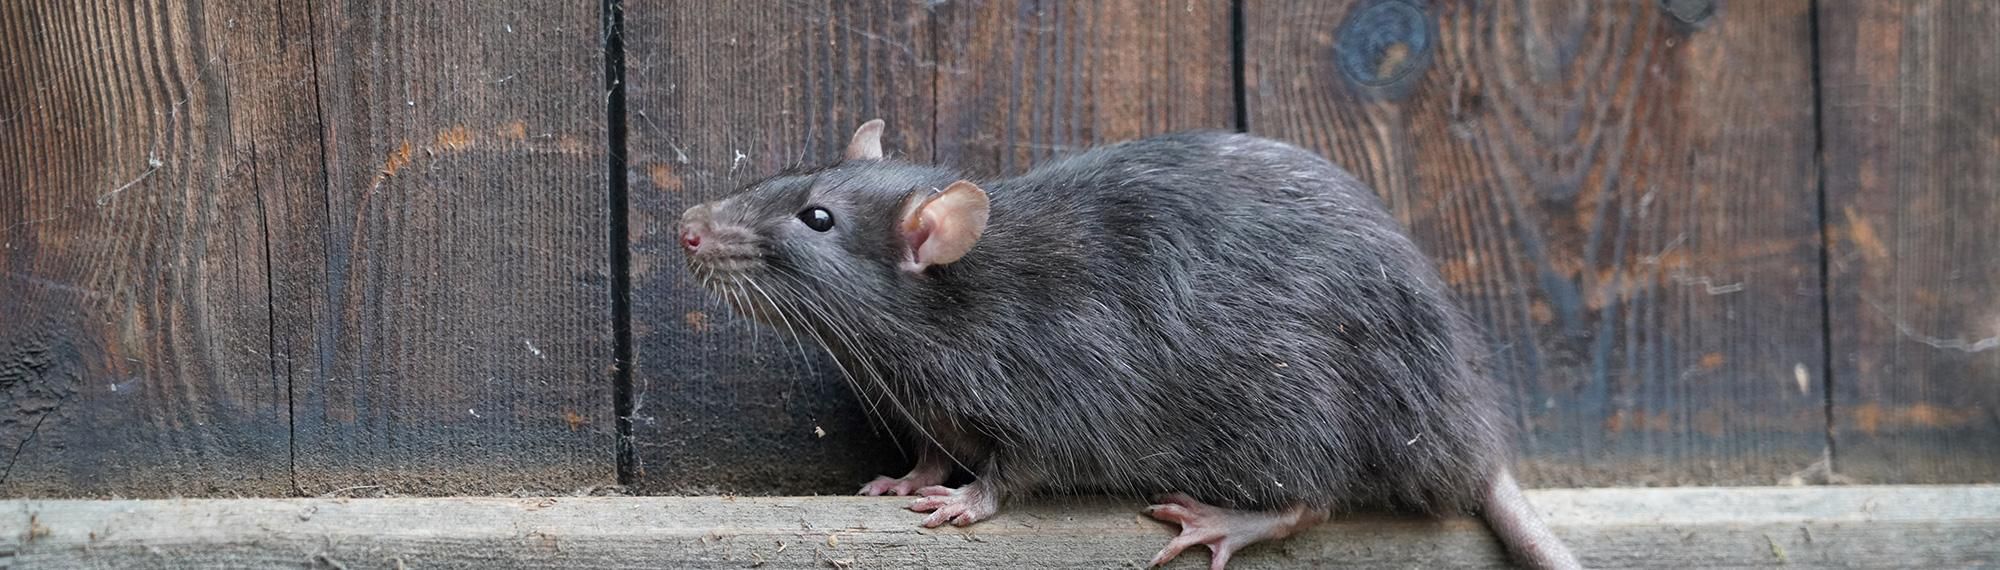 norway rat near a fence